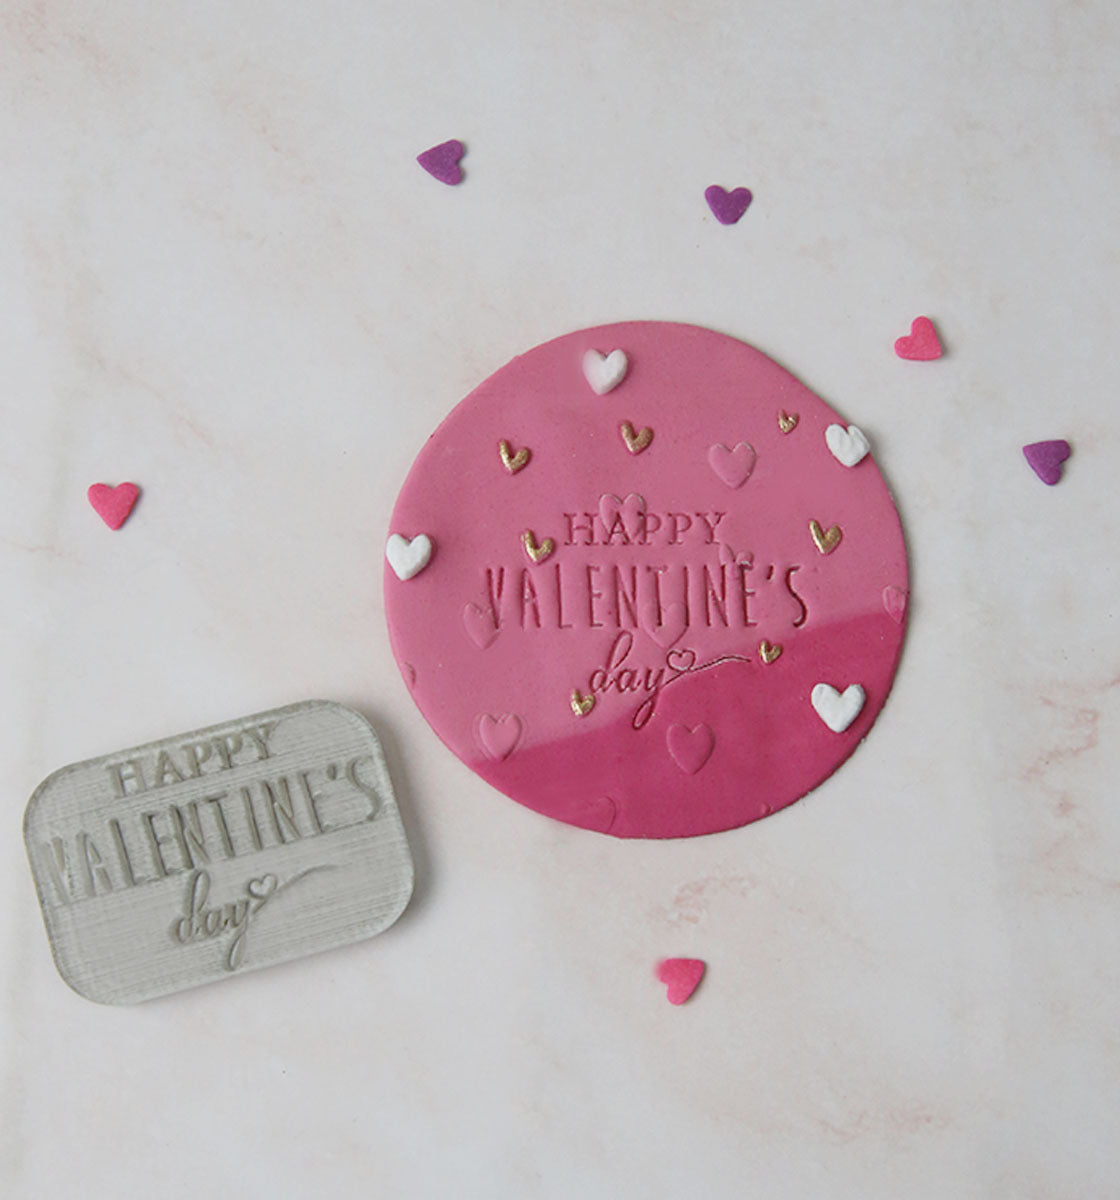 Happy valentines day - sleek impression stamp